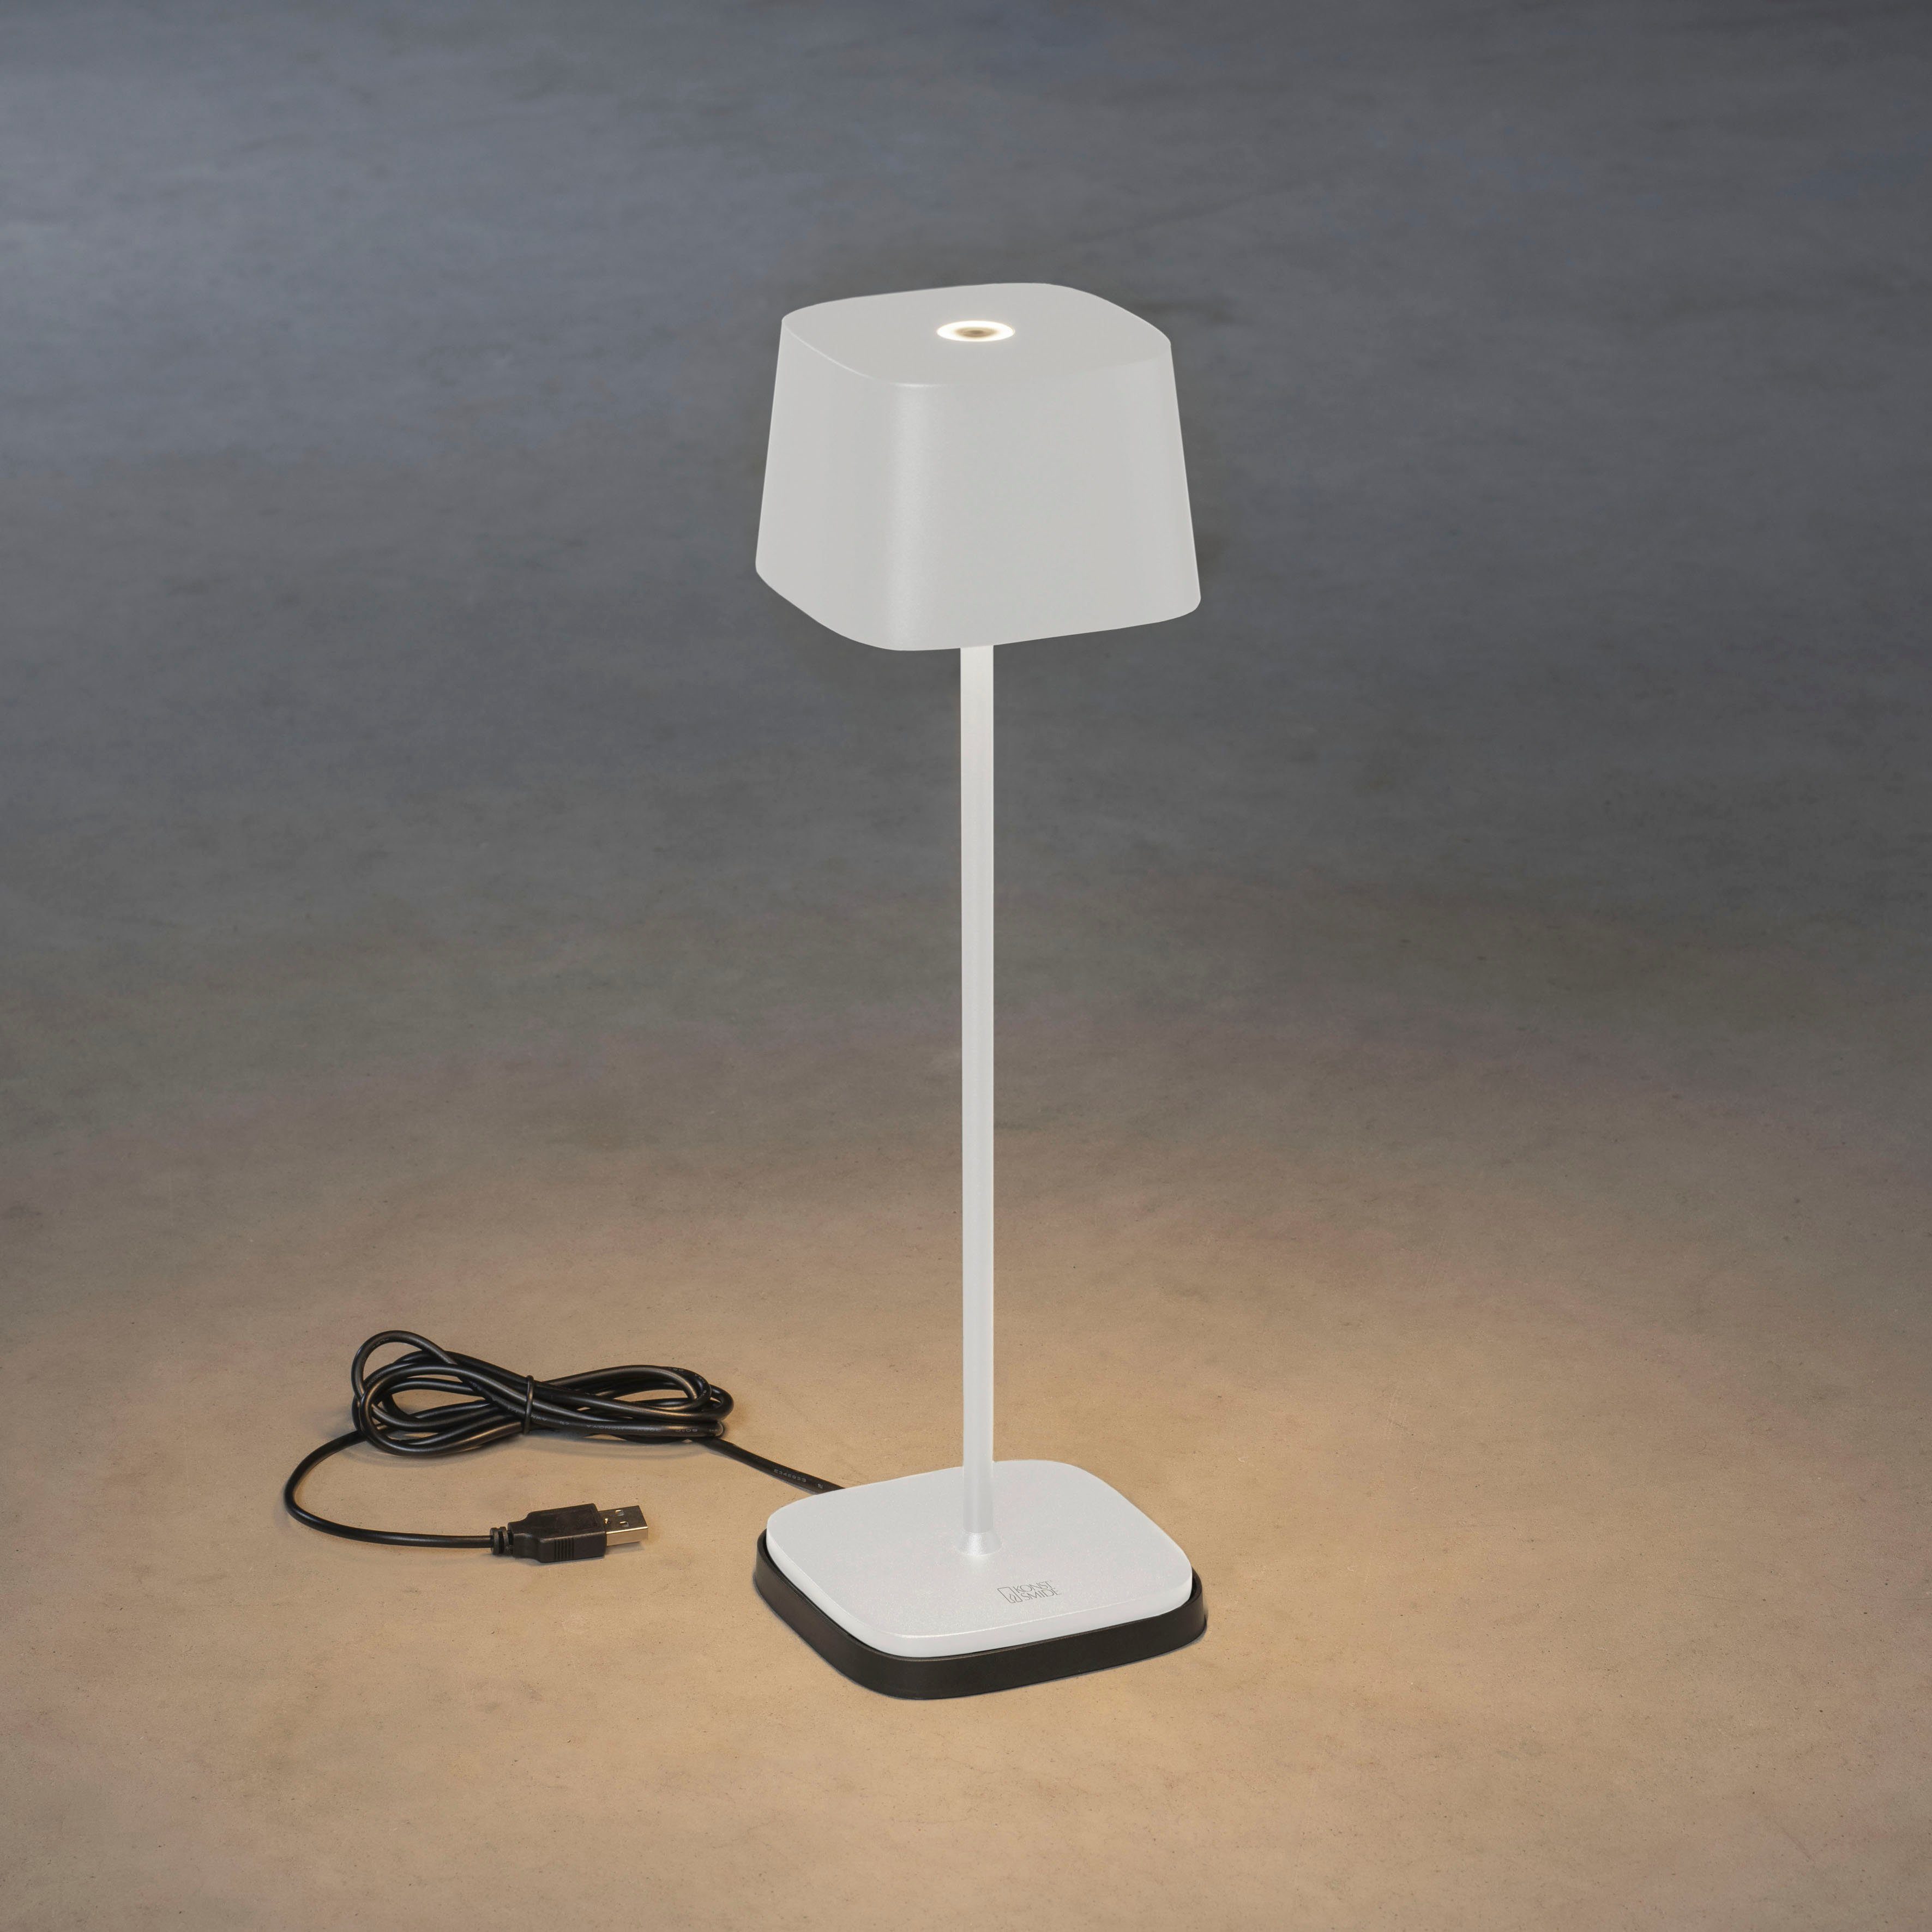 KONSTSMIDE LED Tischleuchte Capri, LED Capri Farbtemperatur, weiss, LED Warmweiß, USB-Tischleuchte fest integriert, dimmbar